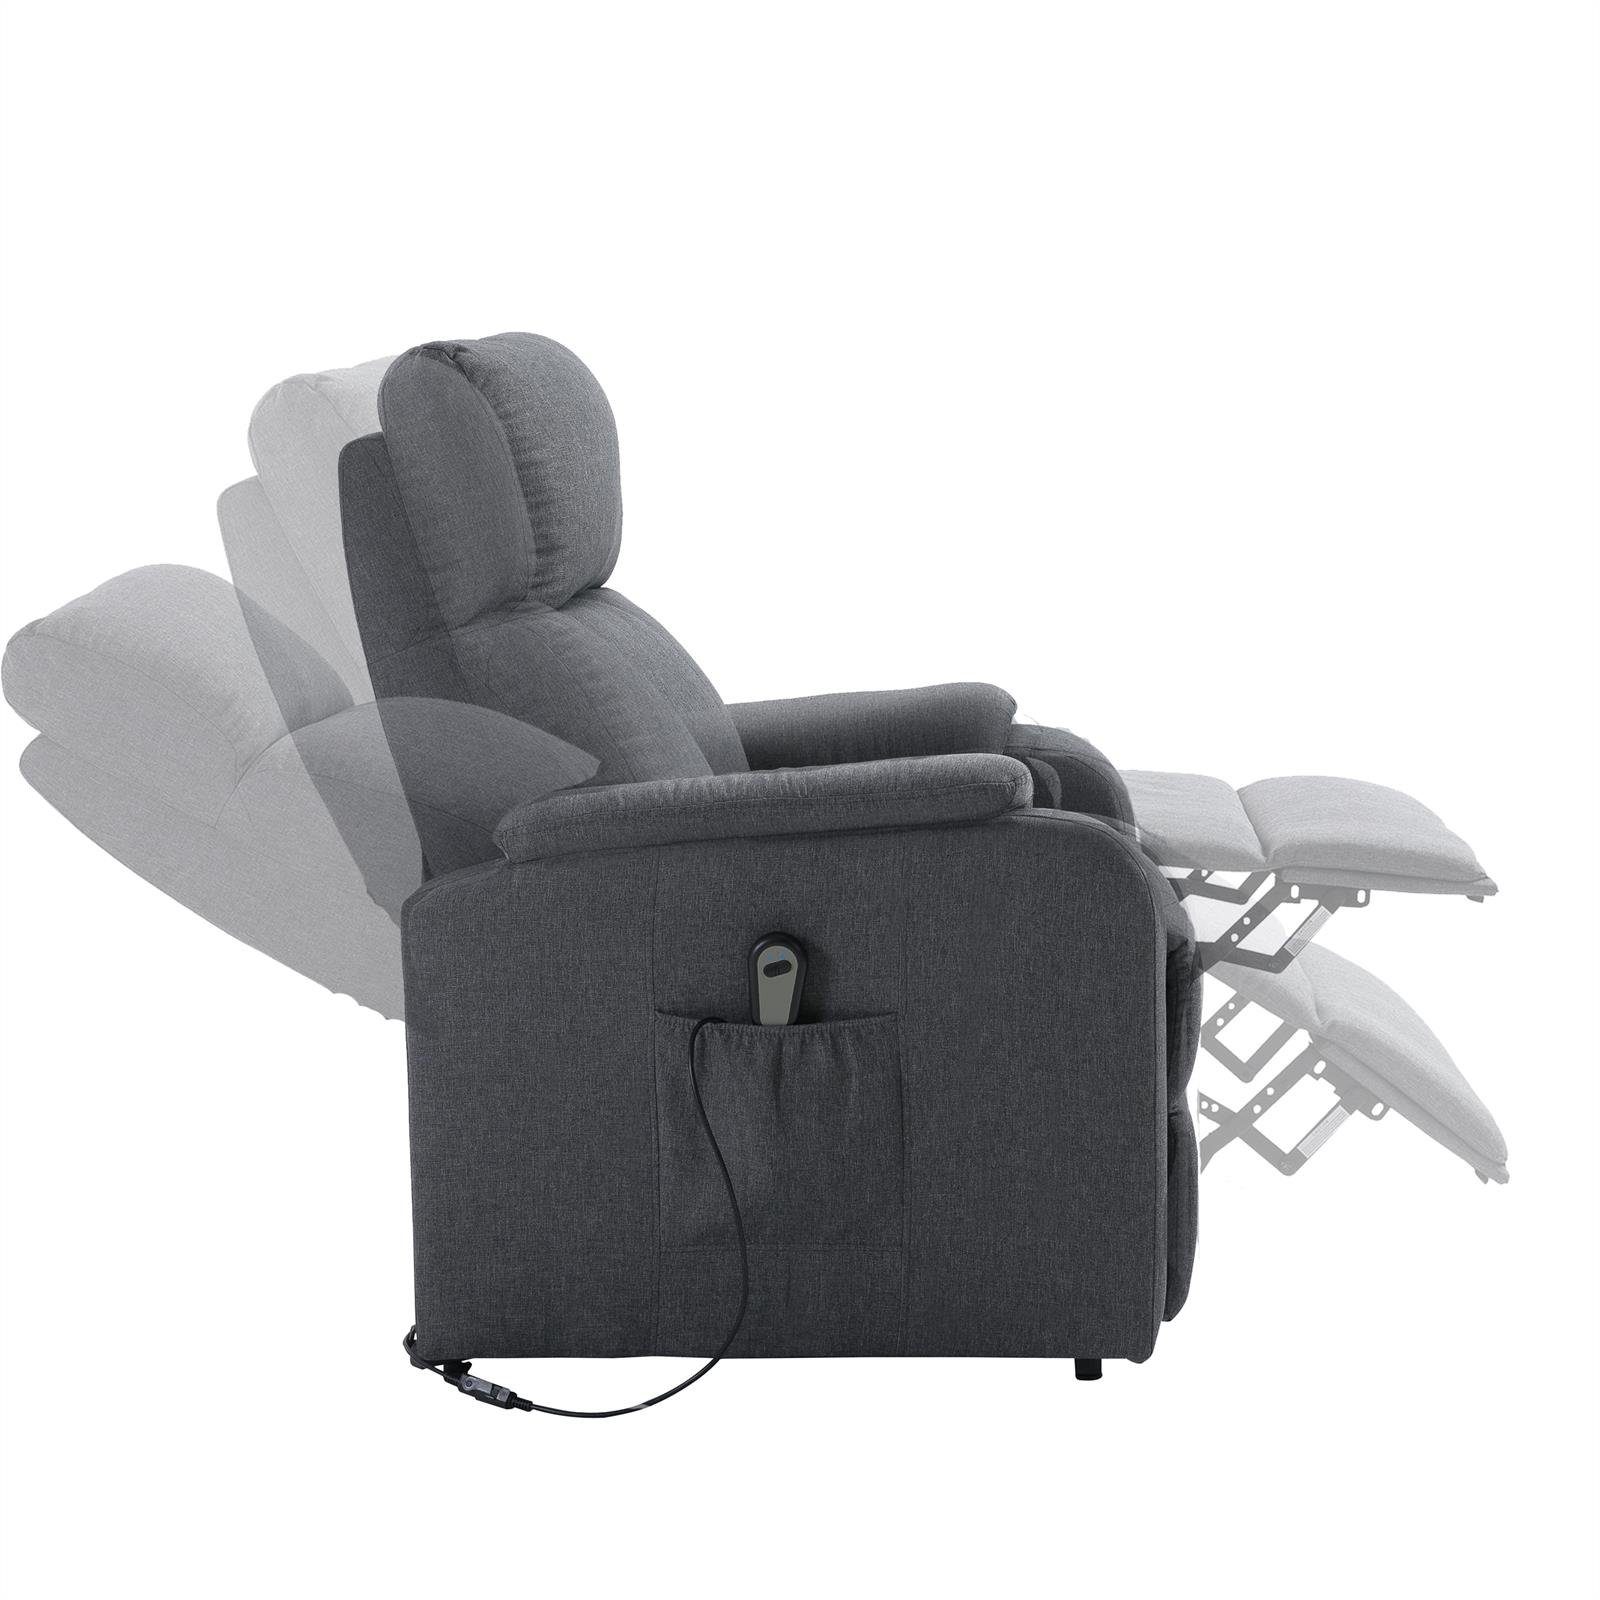 Ruhe Sessel grau CARO-Möbel TV Fernsehsessel mit elektrisc RETIRE, TV-Sessel Relaxsessel Aufstehfunktion